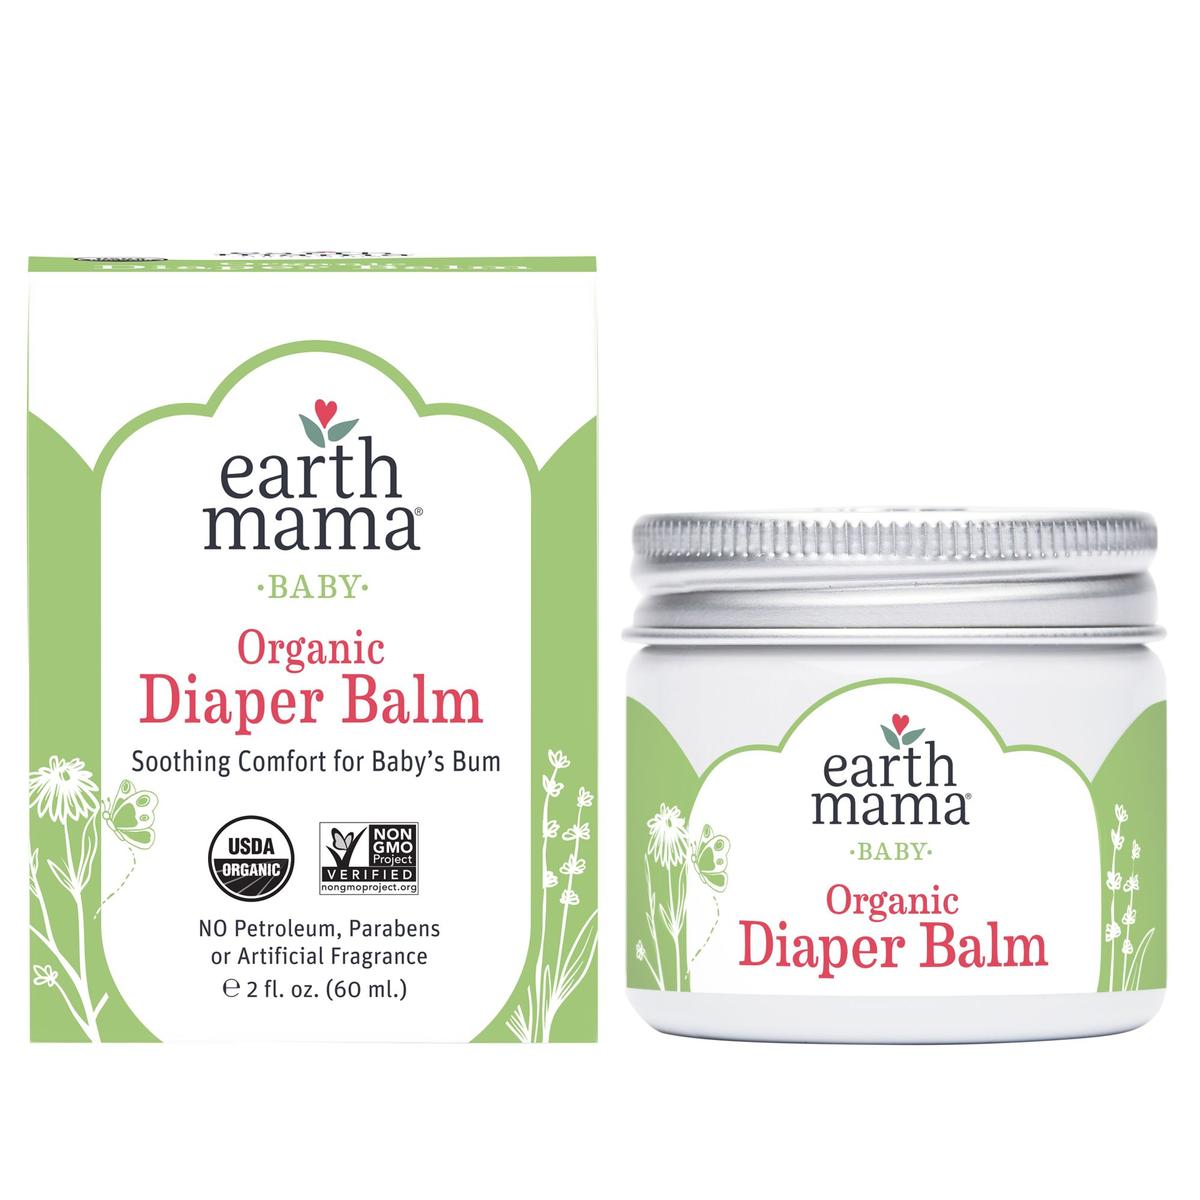 Primary image of Organic Diaper Balm